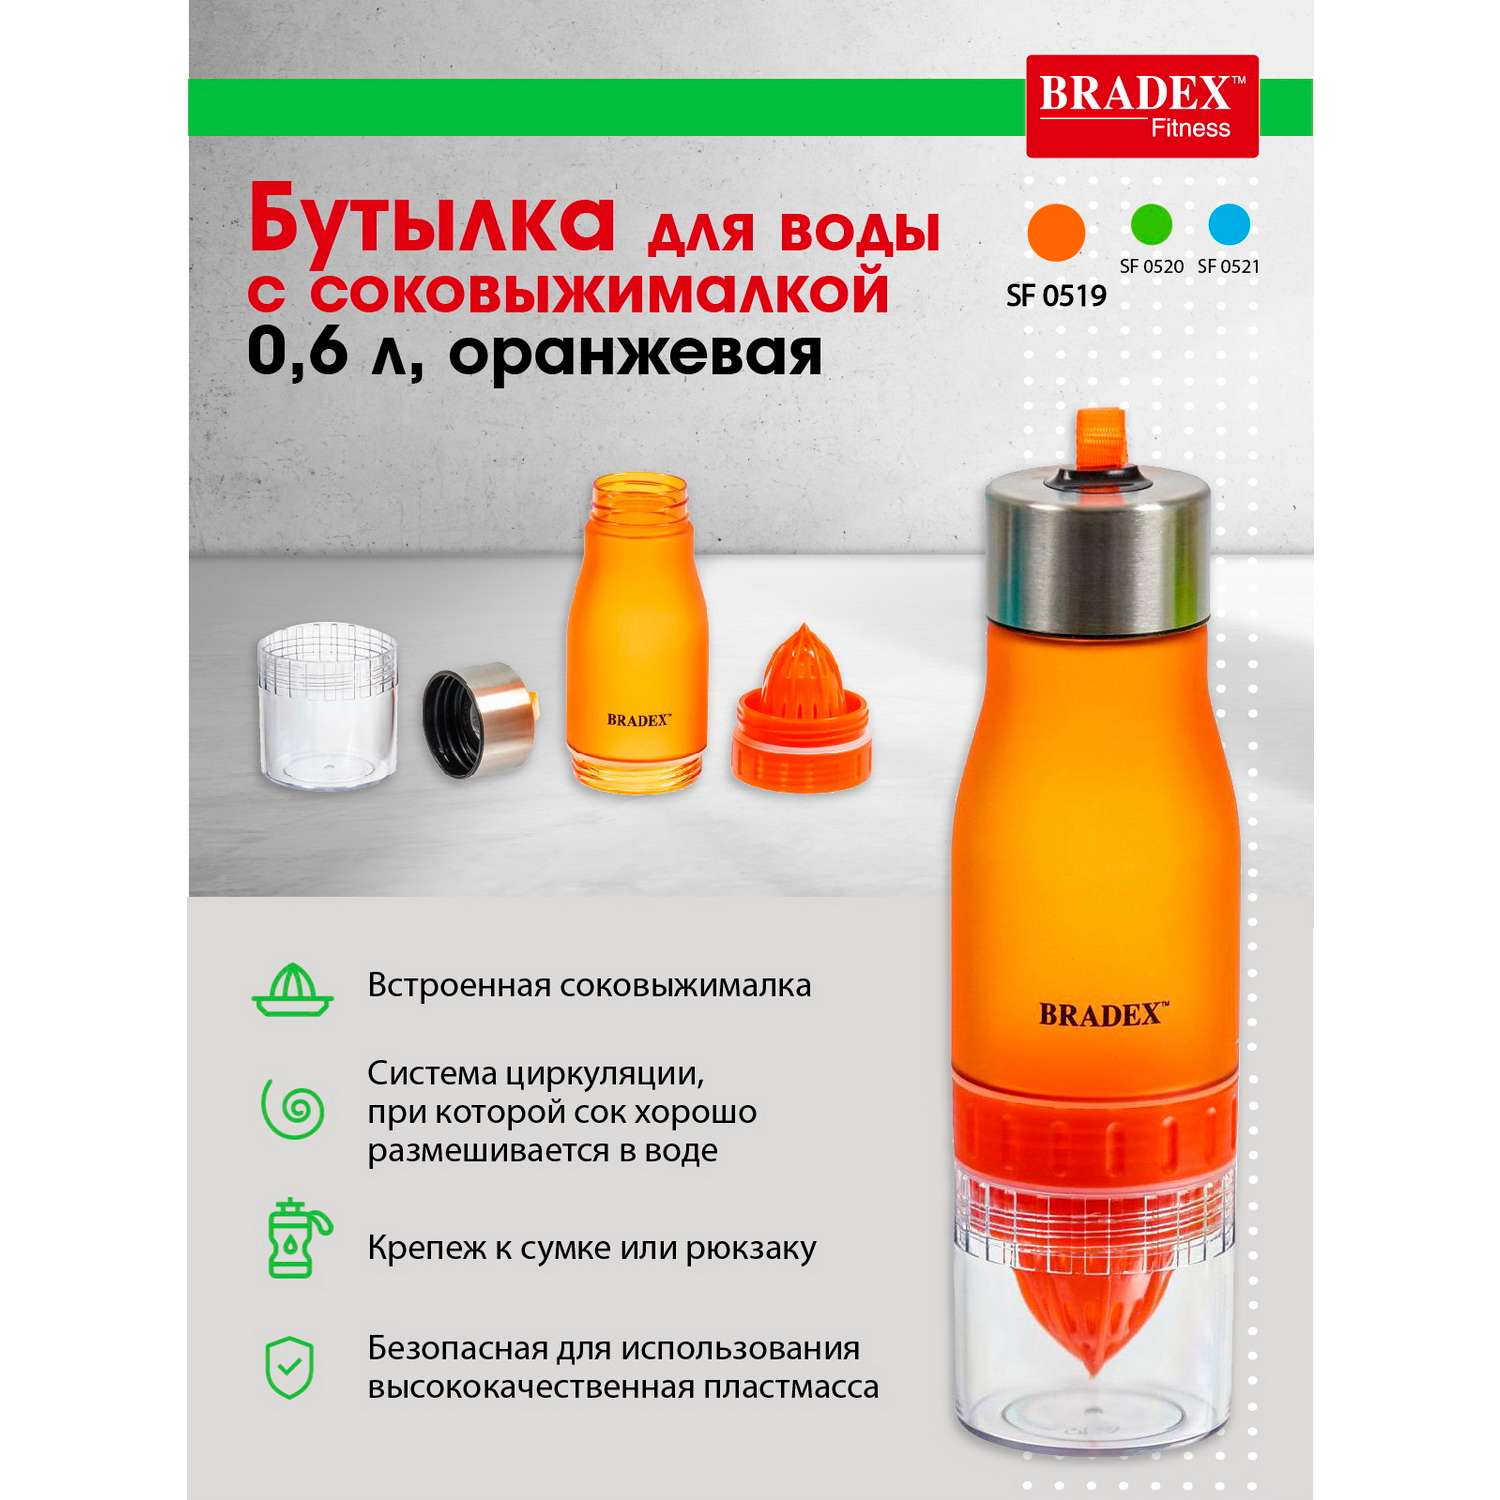 Бутылка для воды Bradex 0.6л оранжевая с соковыжималкой SF 0519 - фото 5